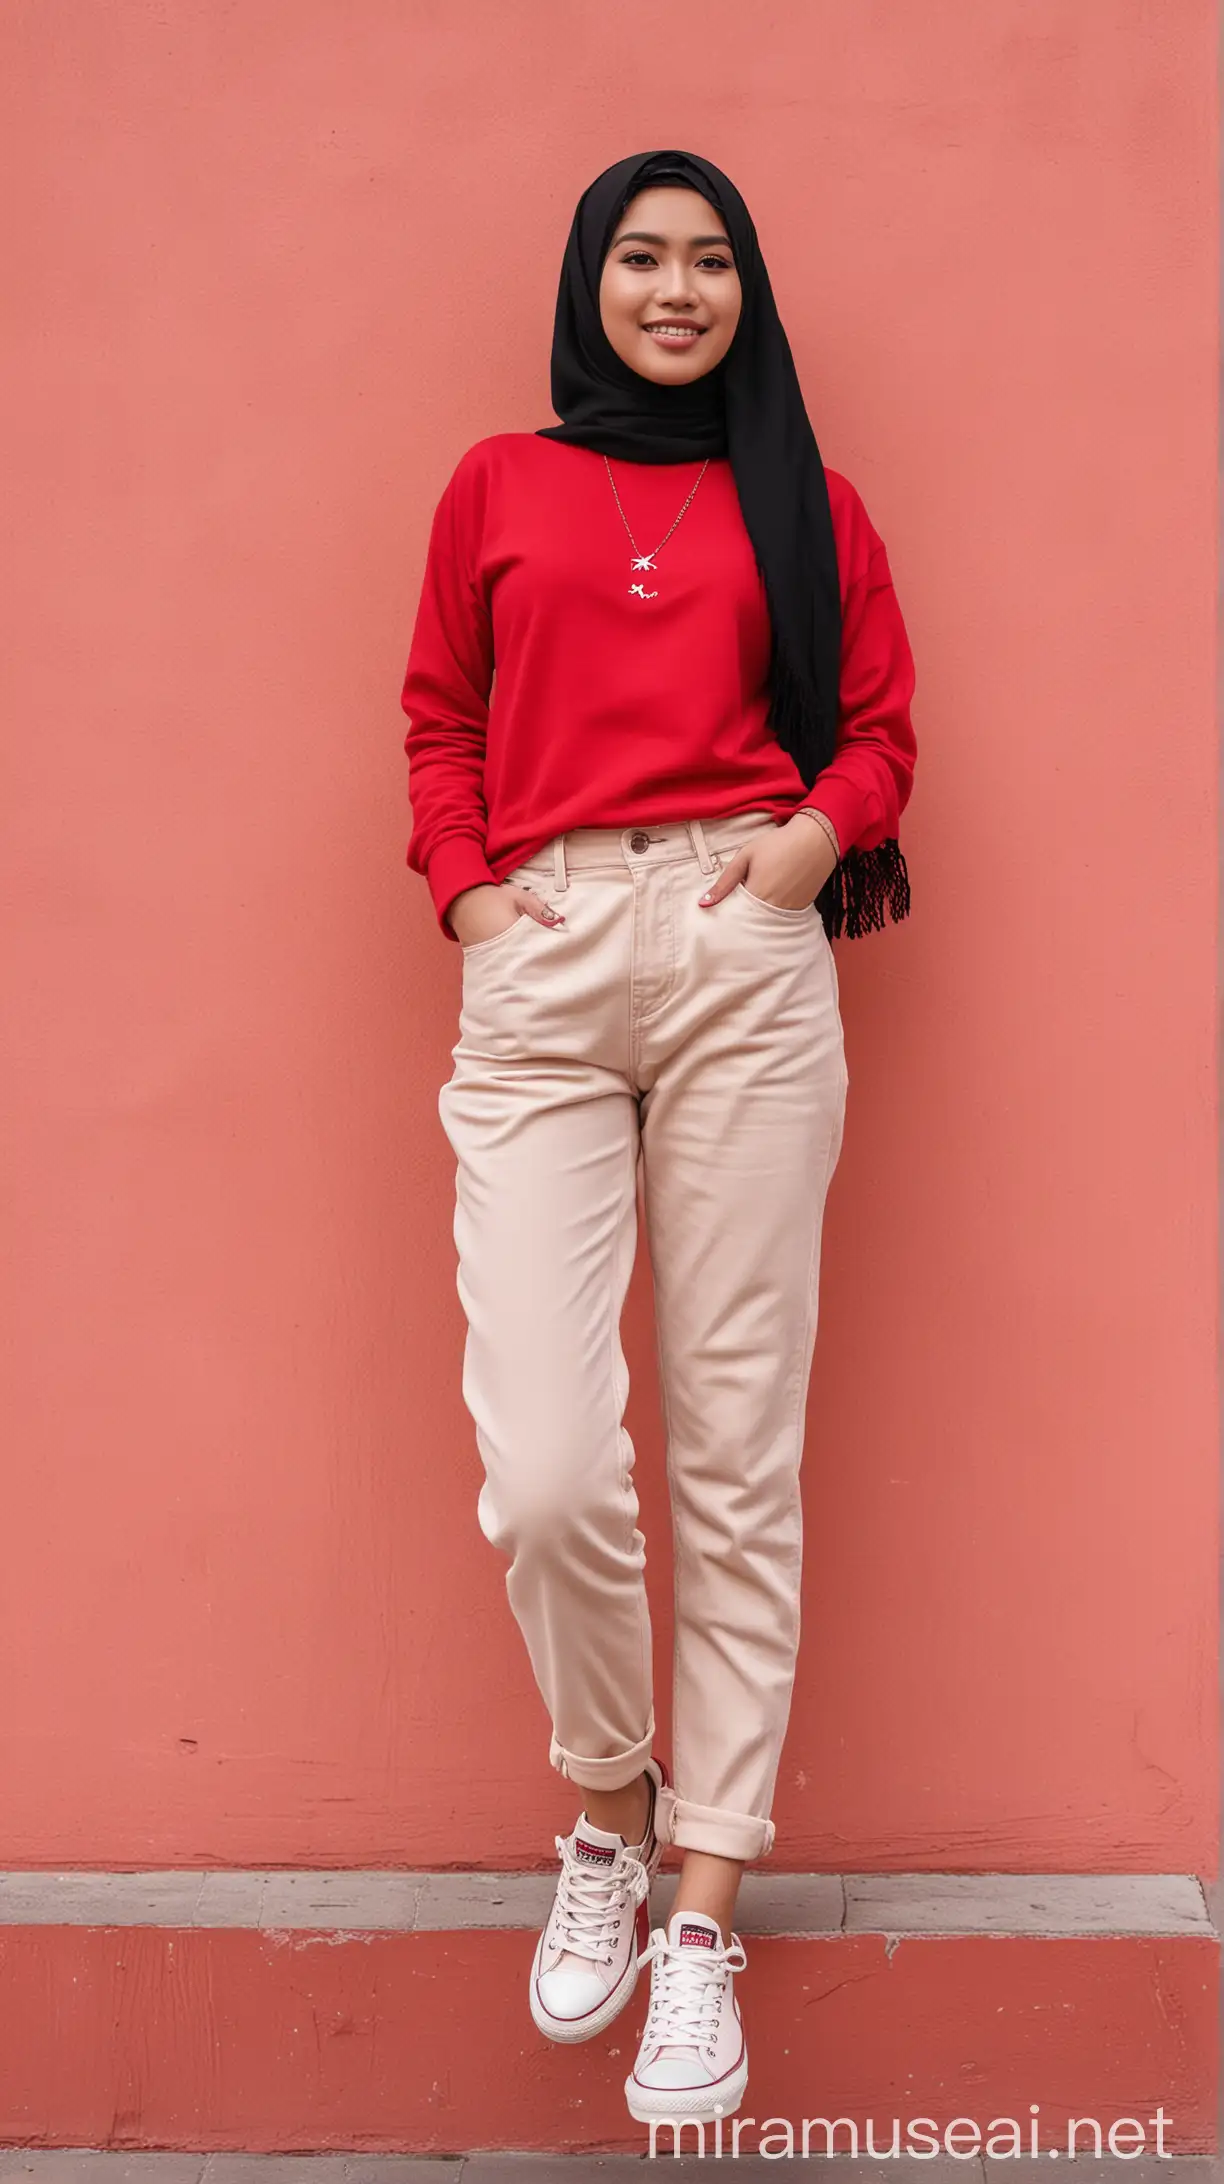 Beautiful Indonesian Woman in Hijab Red Sweater Fashion Portrait